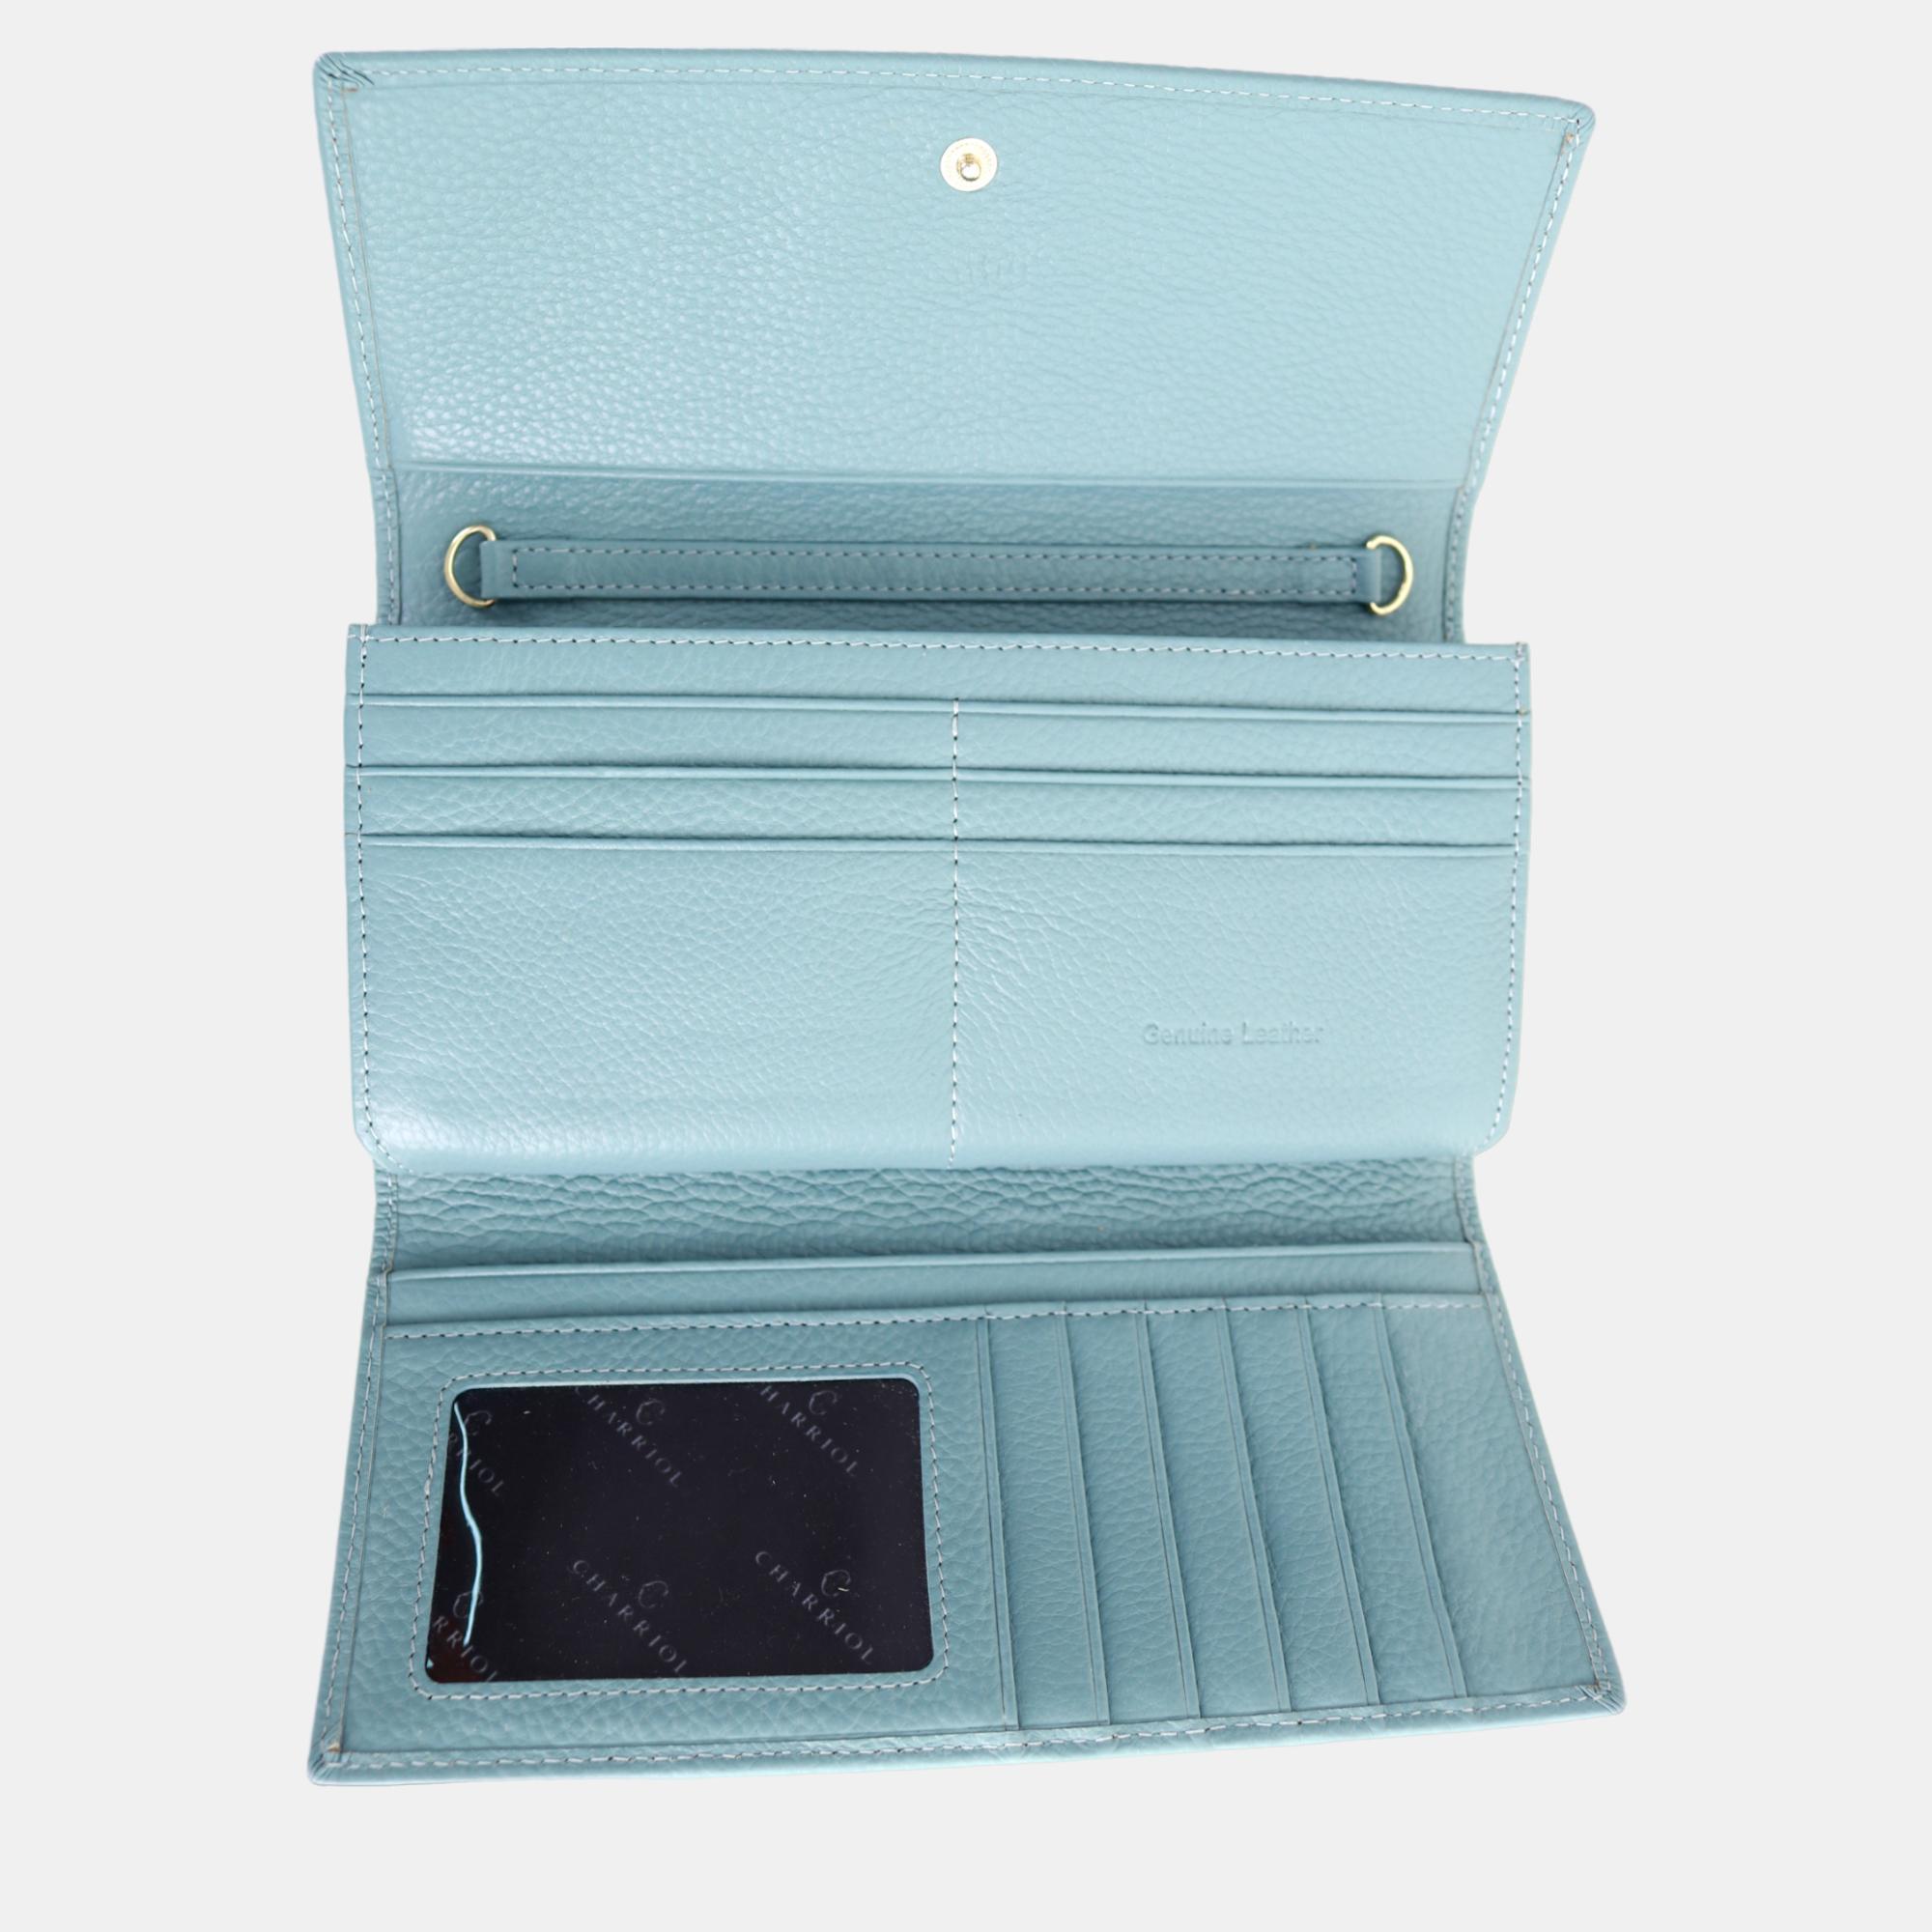 Charriol Light Blue Leather  Wallet